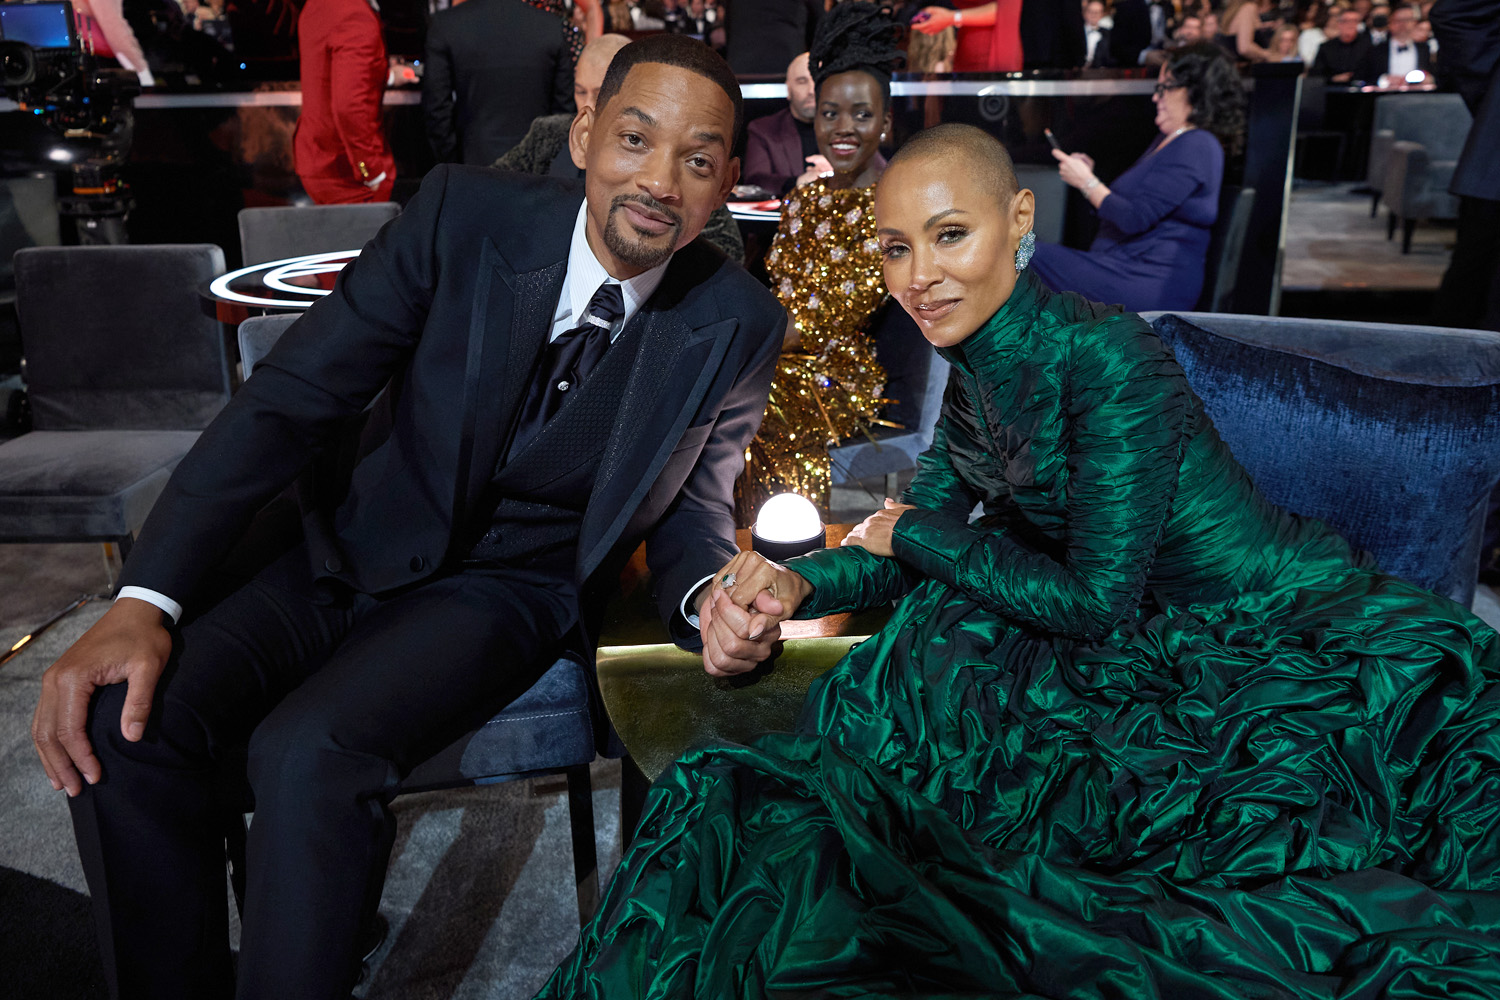 Jada Pinkett Smith Breaks Silence After Will Smith Hit Chris Rock at Oscars: 'Season for Healing'